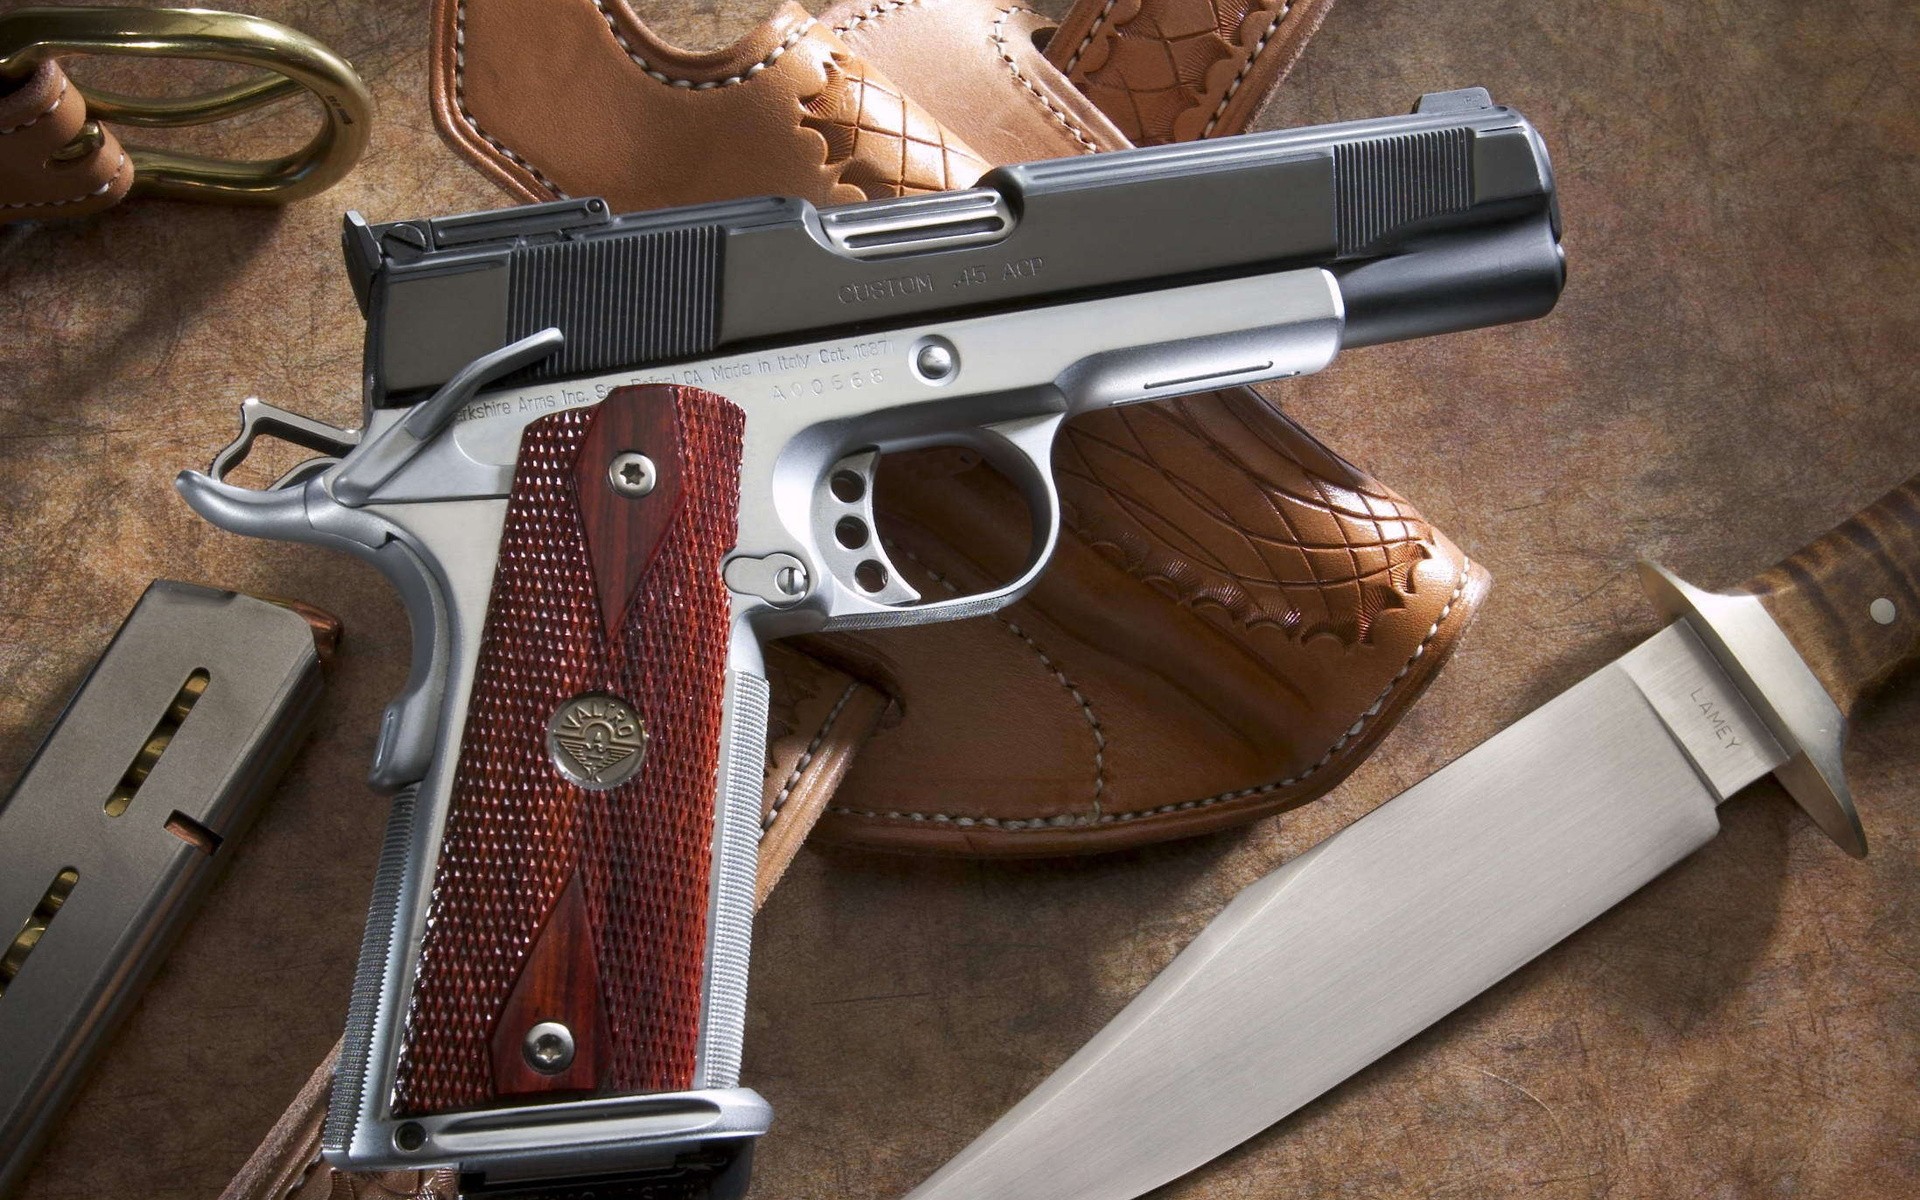 General 1920x1200 gun knife M1911 holster weapon ammunition American firearms